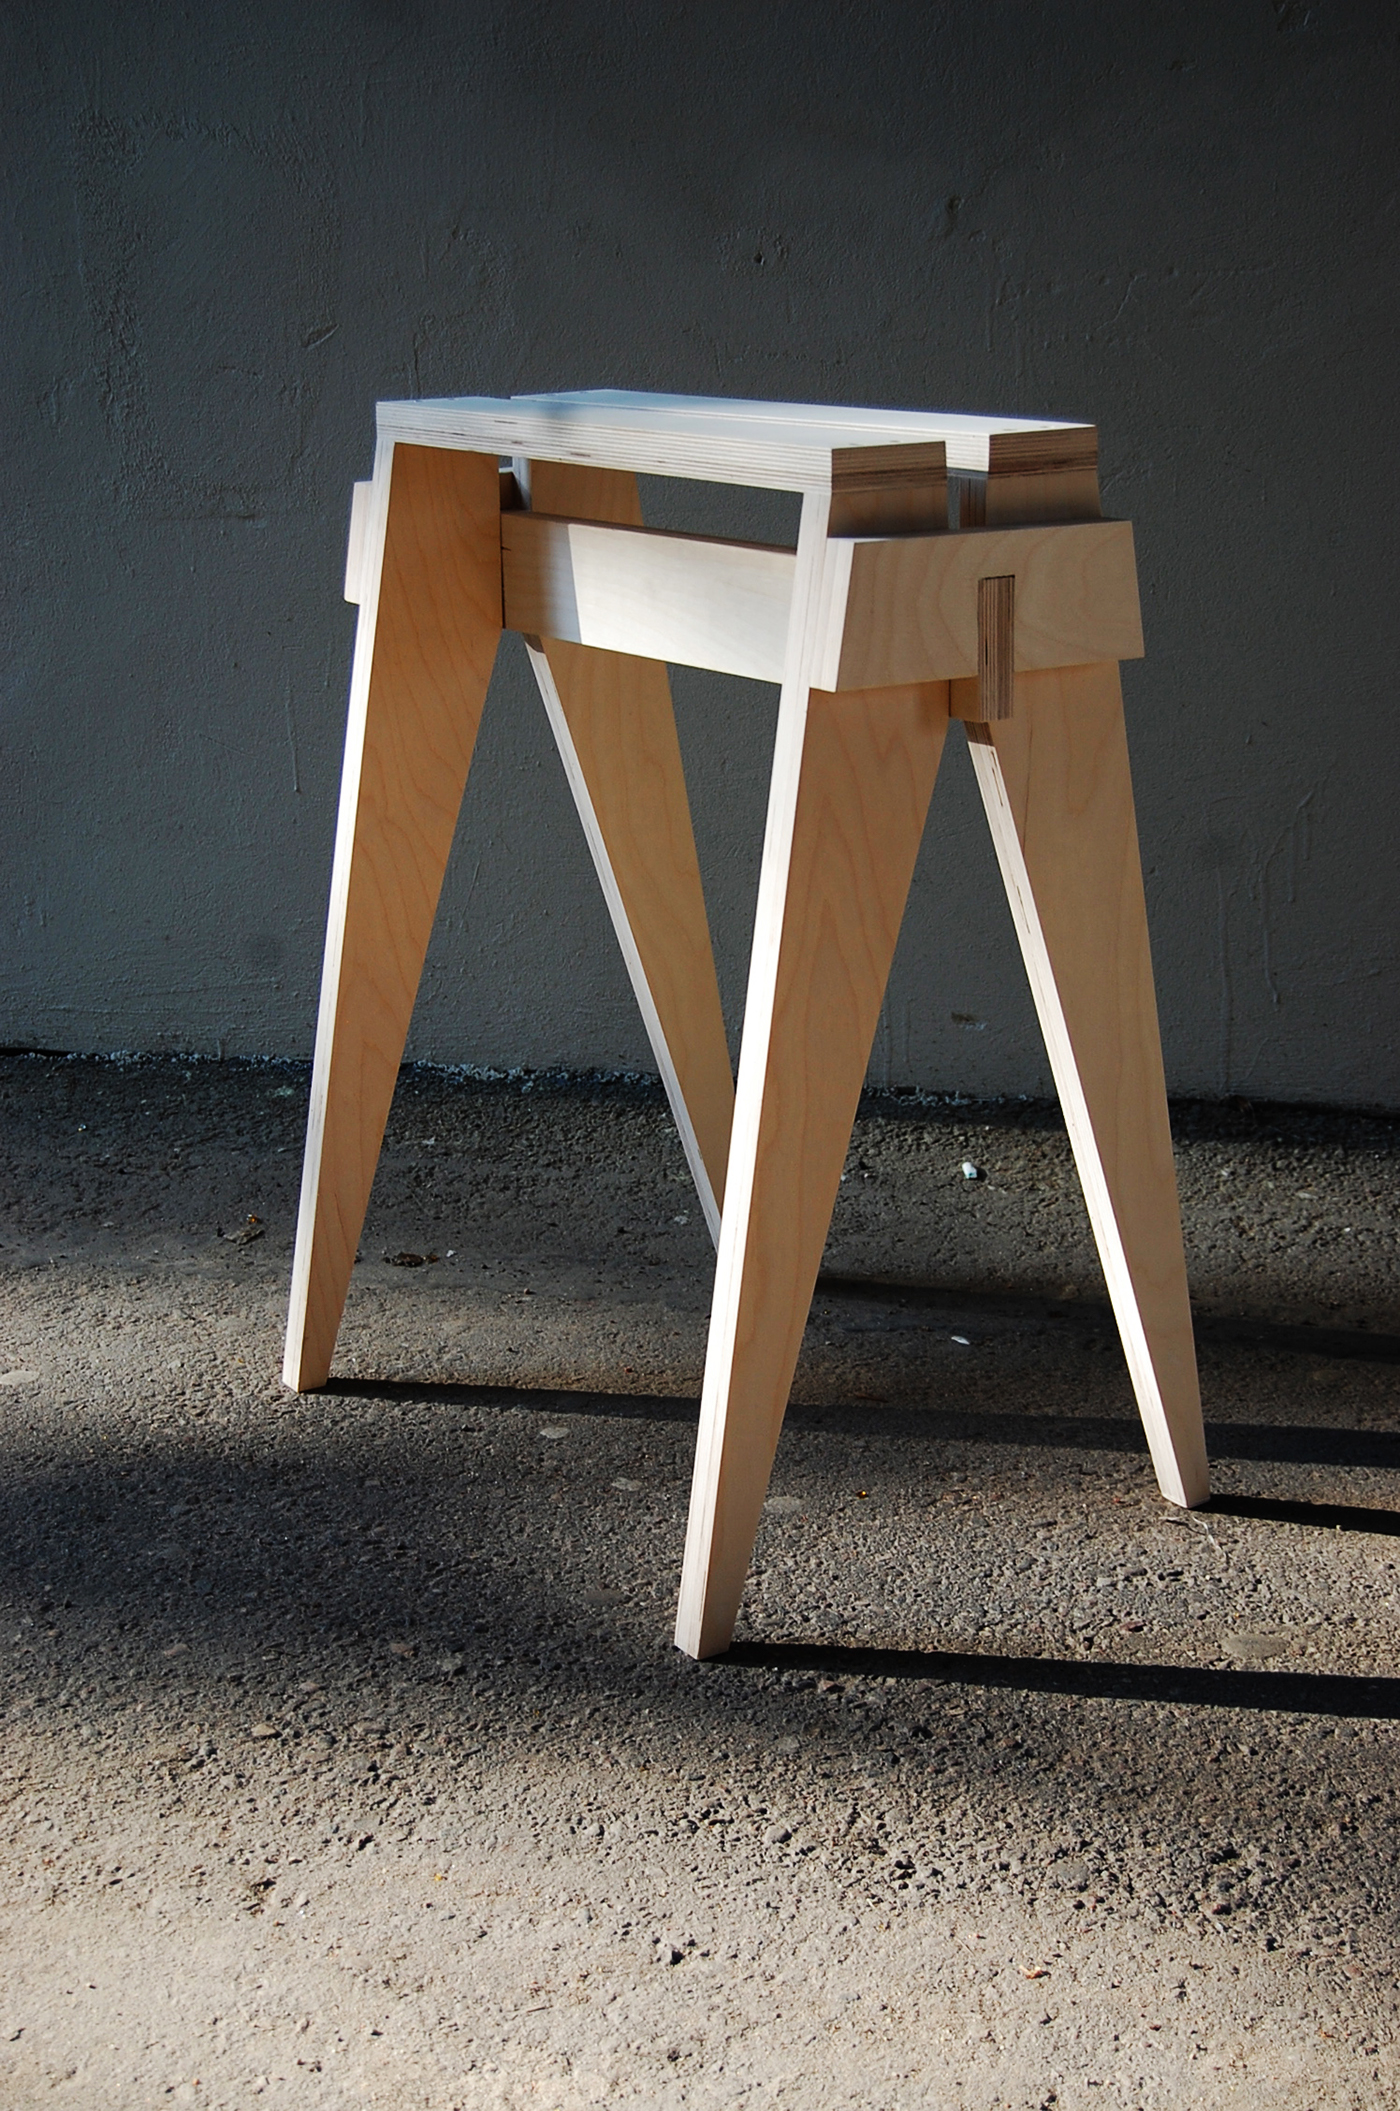 ozka chair stool furniture goat wood materials bench indoor Interior construction design idea PEW seat